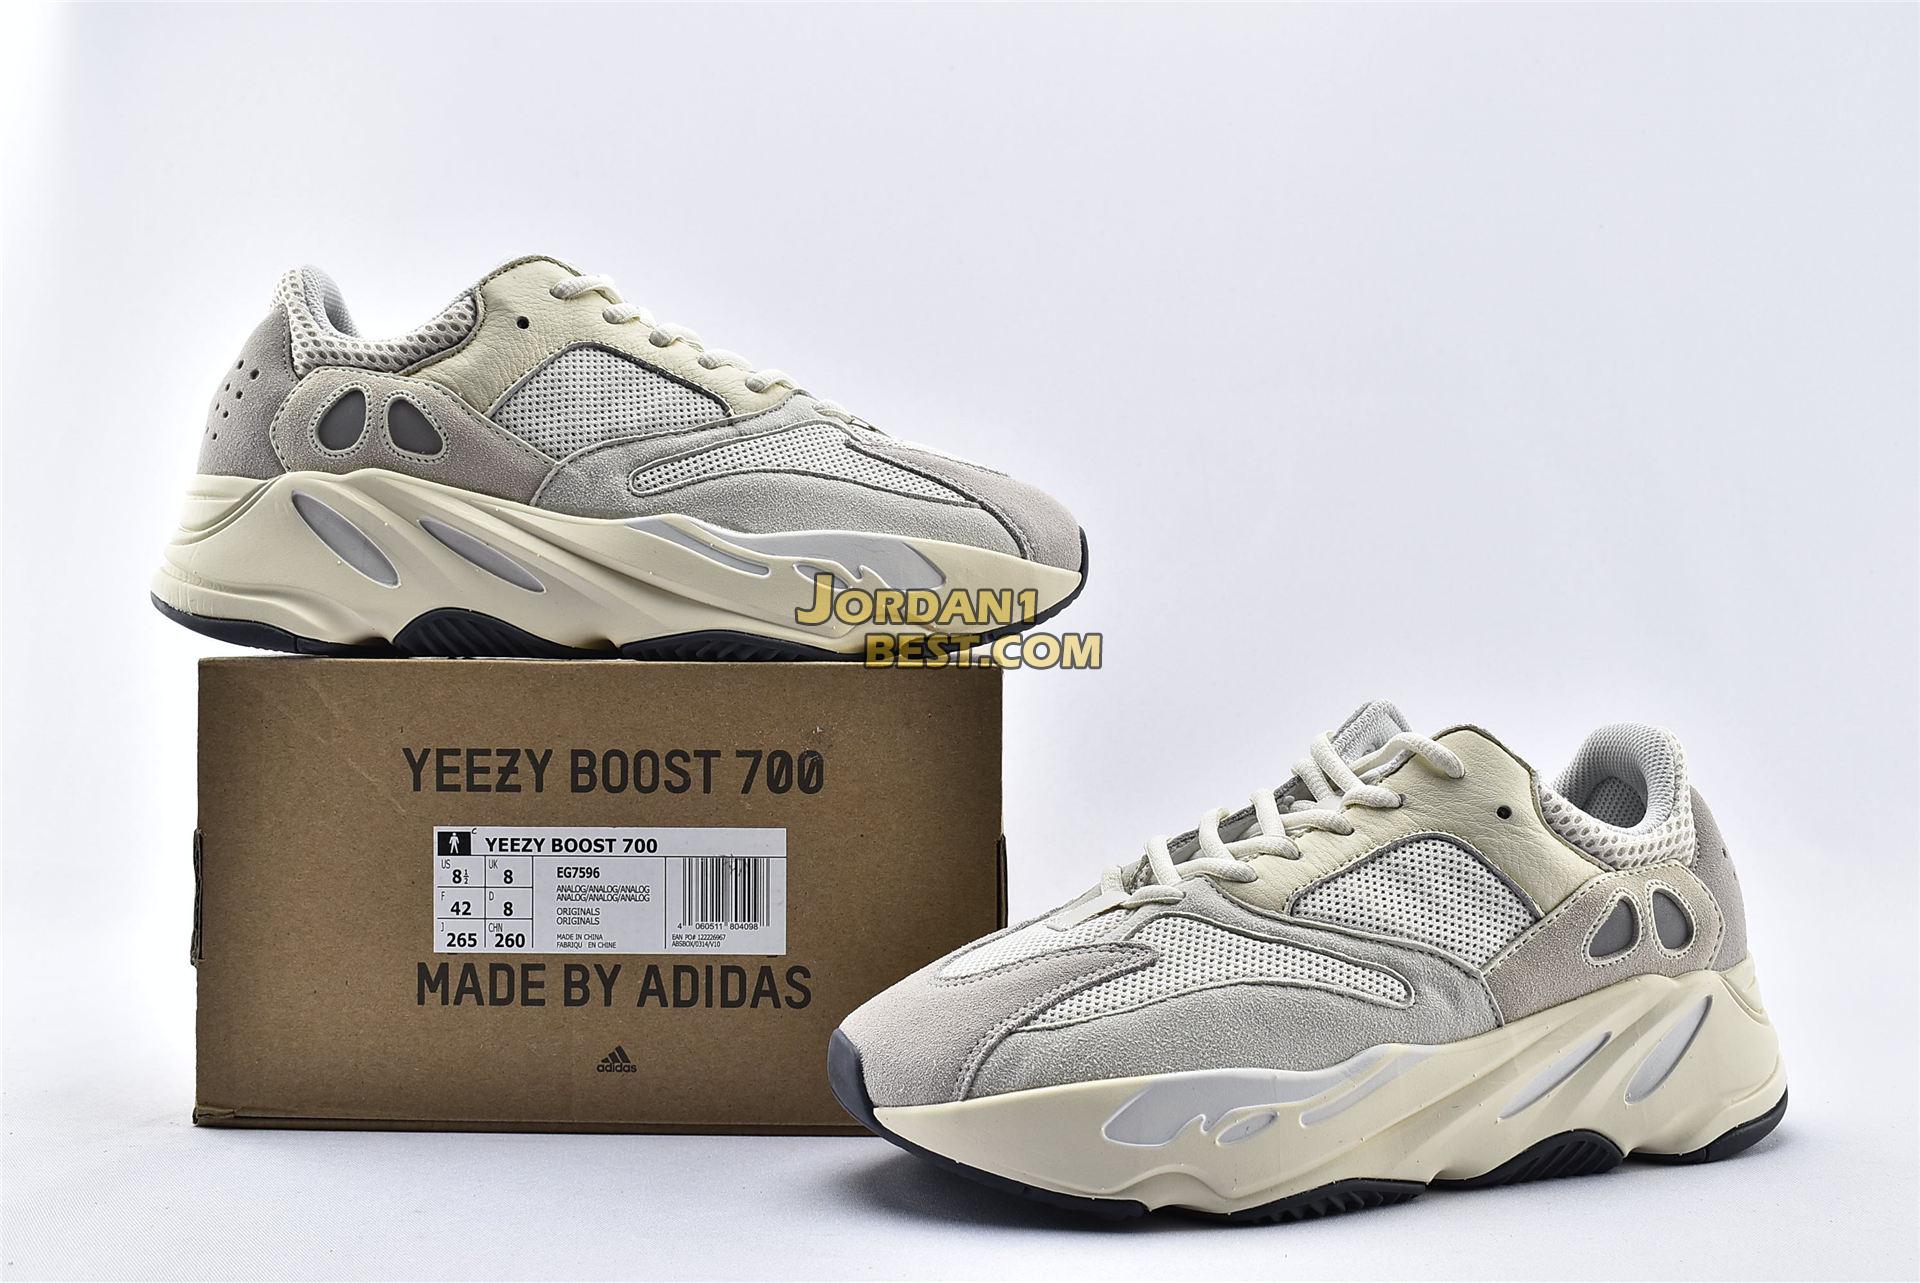 Adidas Yeezy Boost 700 "Analog" EG7596